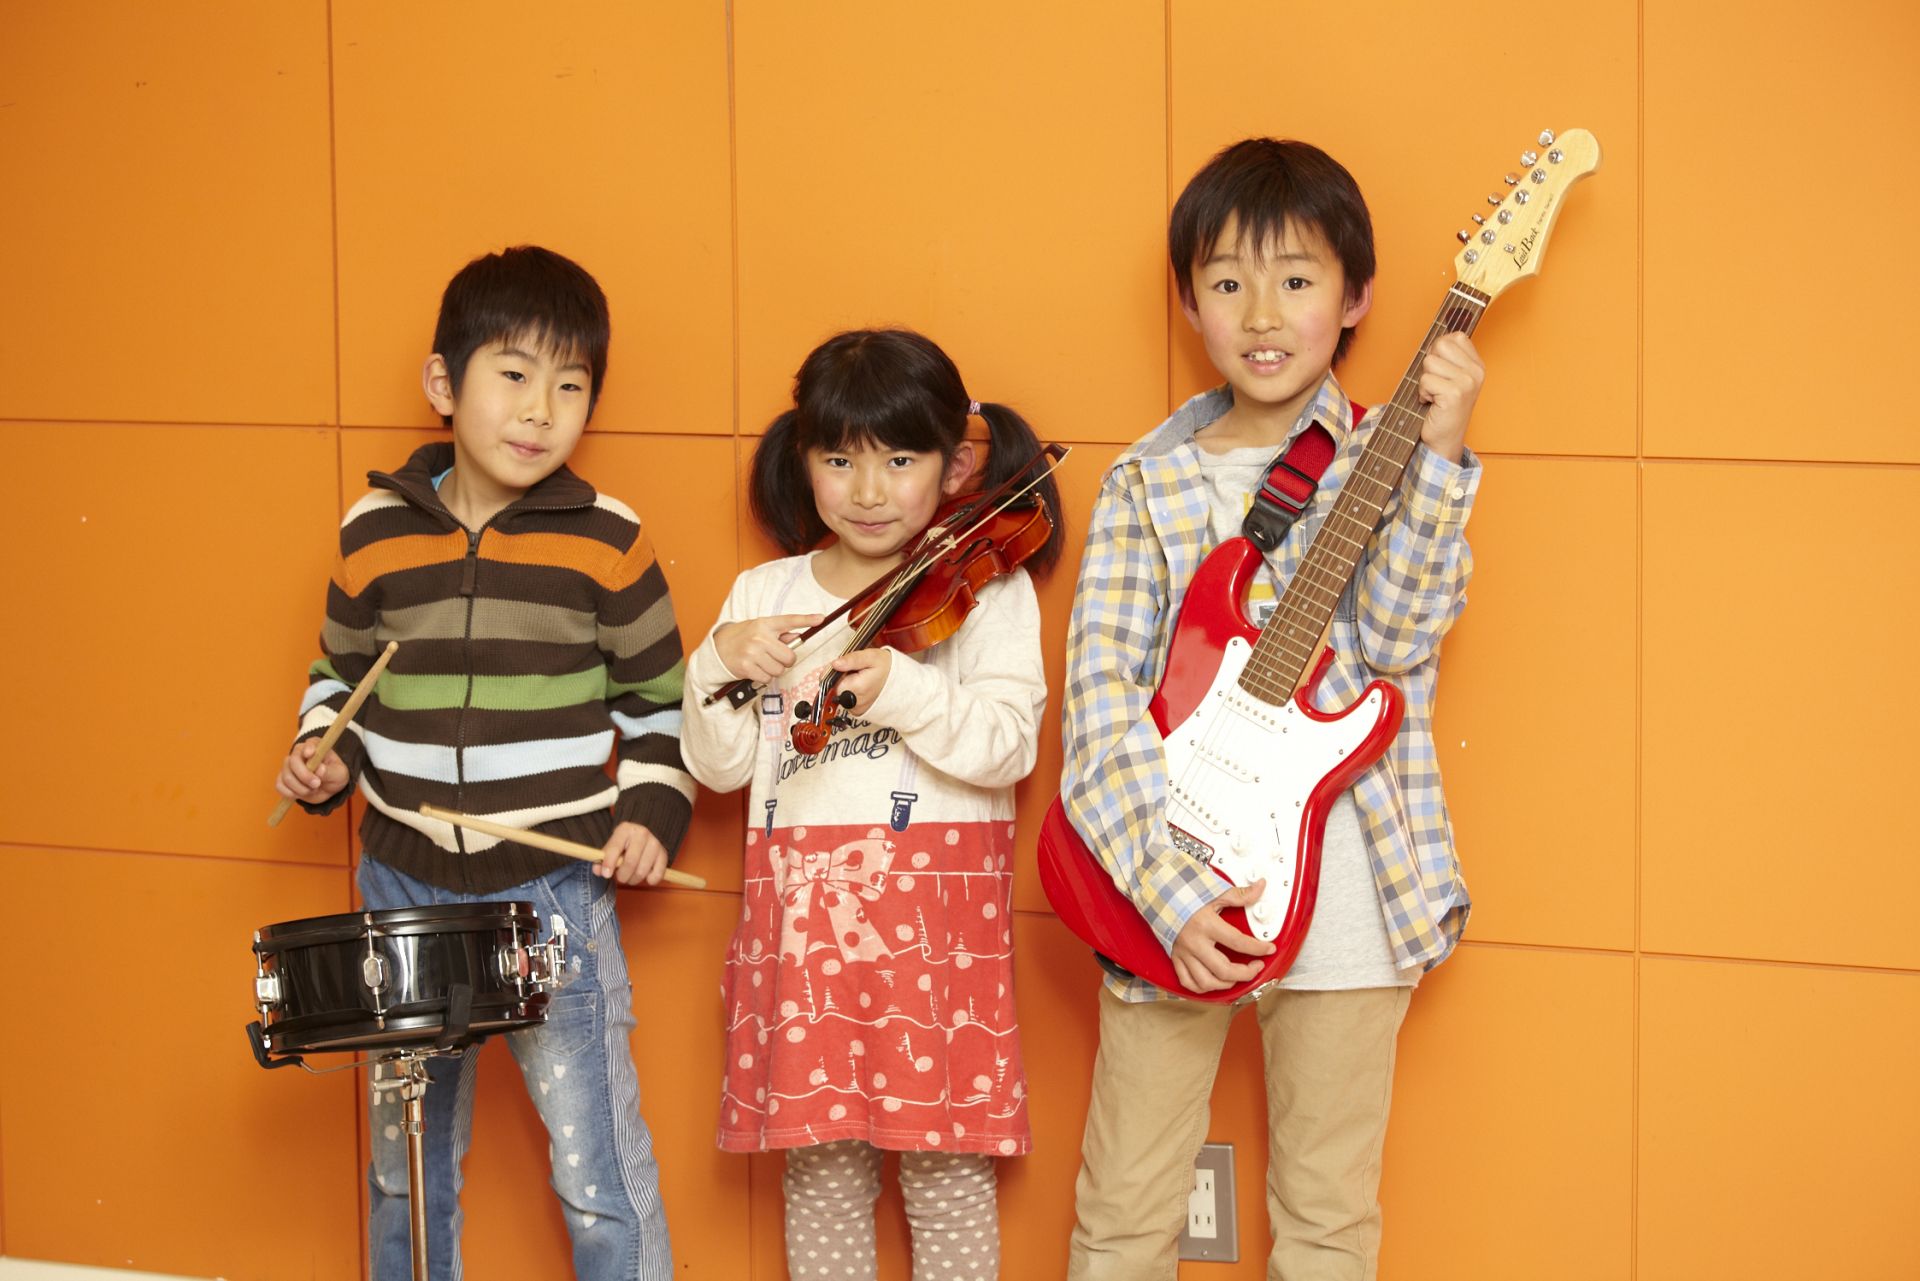 [https://www.shimamura.co.jp/shop/hakata/lesson-info/20200625/4381:title=] *お子様の習い事を検討されている保護者様へ 創造性や自発性が発達する時期だからこそ、自由で楽しい雰囲気の中での音楽体験は、お子様の成長に大変効果的です […]